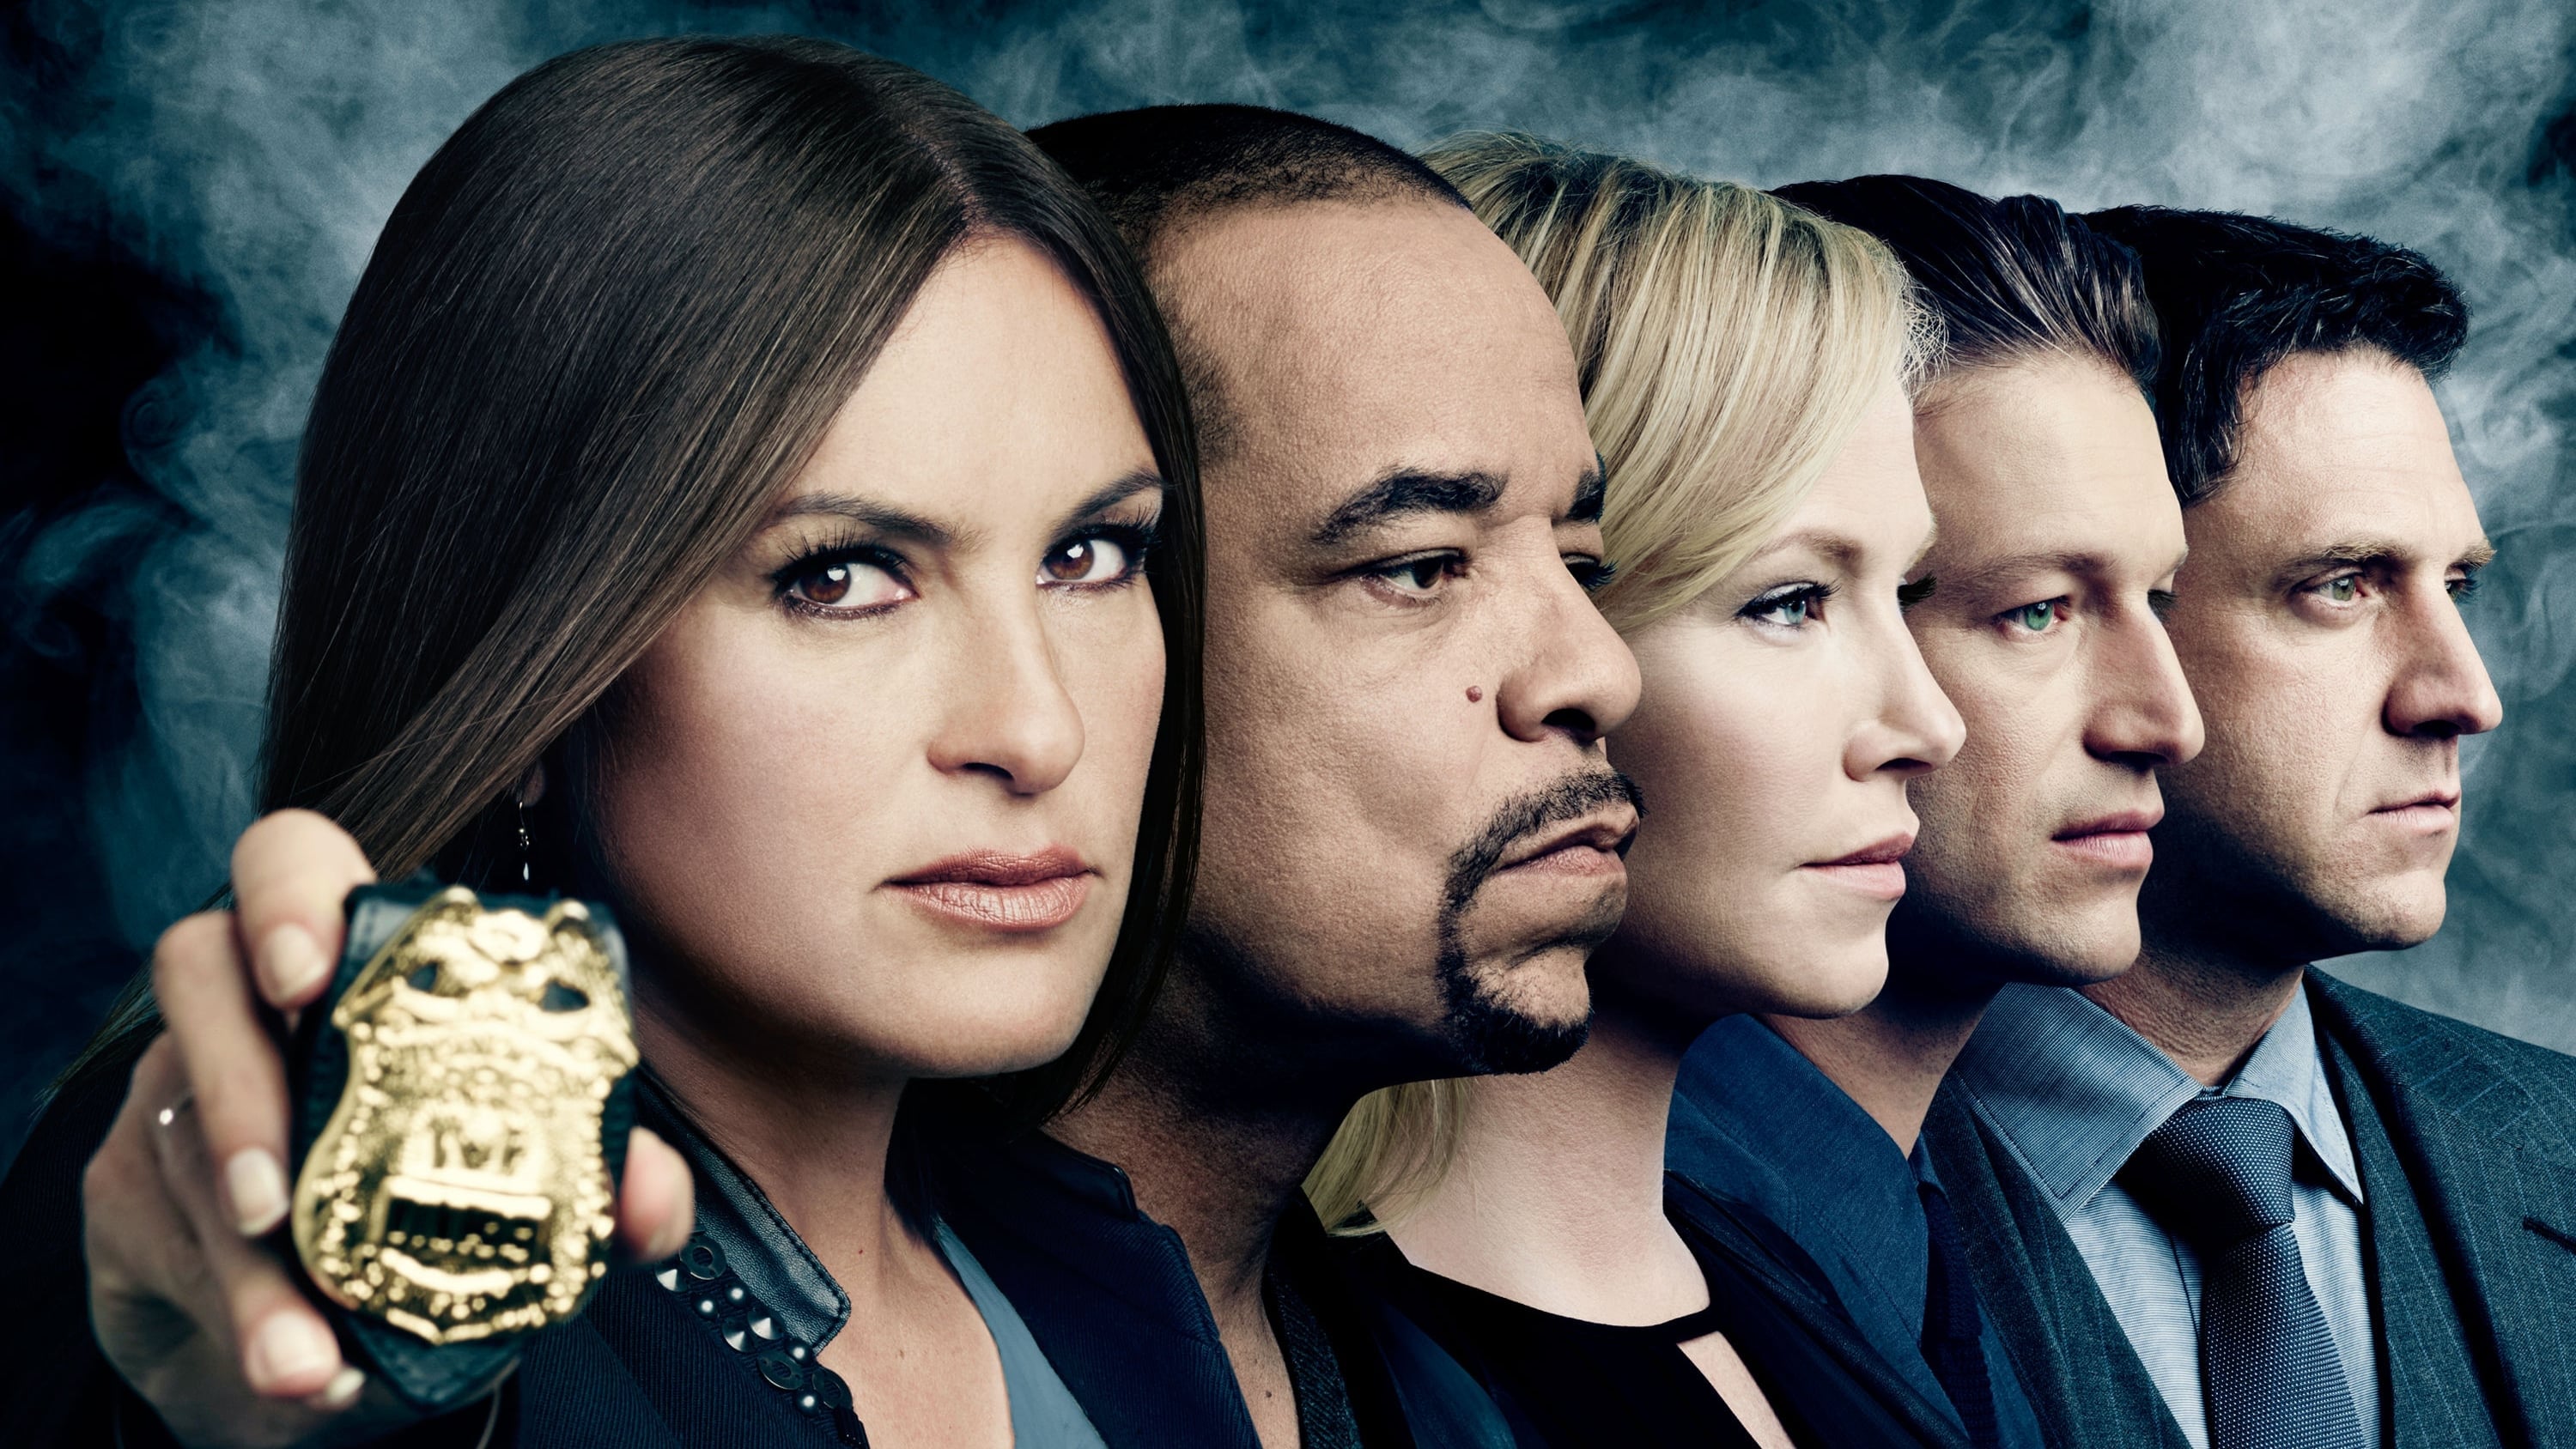 Law & Order: Special Victims Unit - Season 20